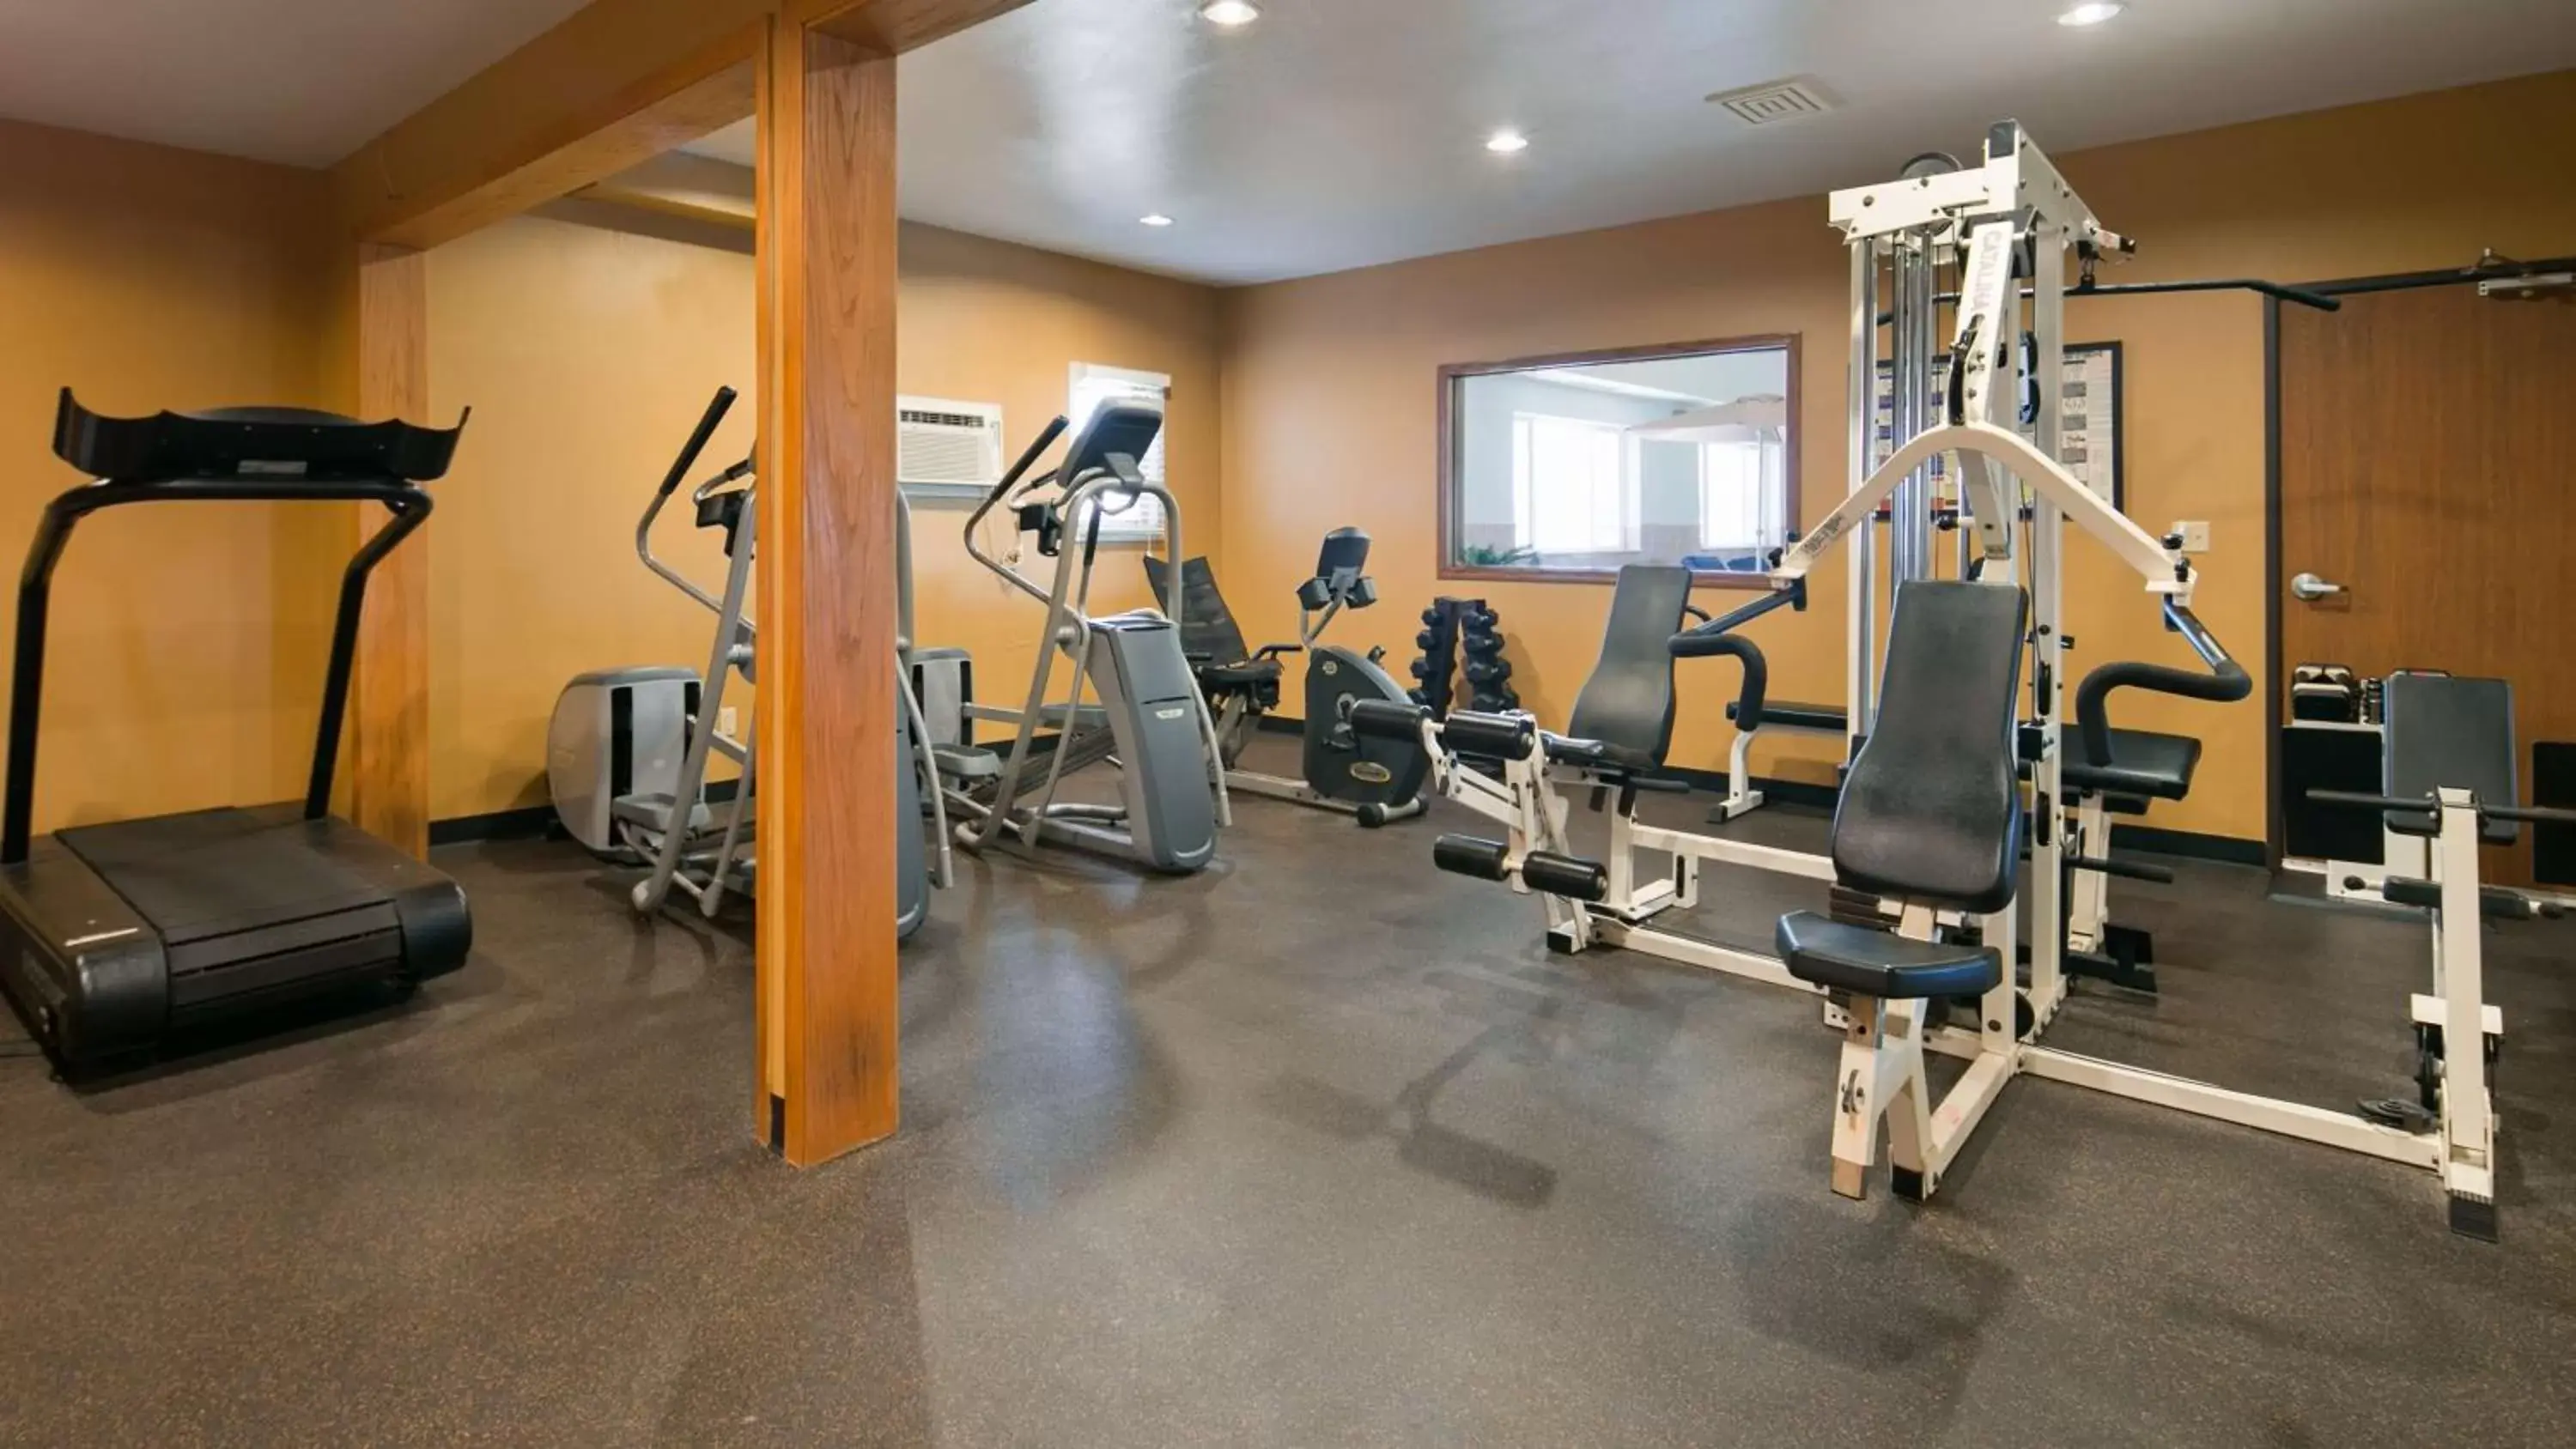 Fitness centre/facilities, Fitness Center/Facilities in Best Western Vermillion Inn